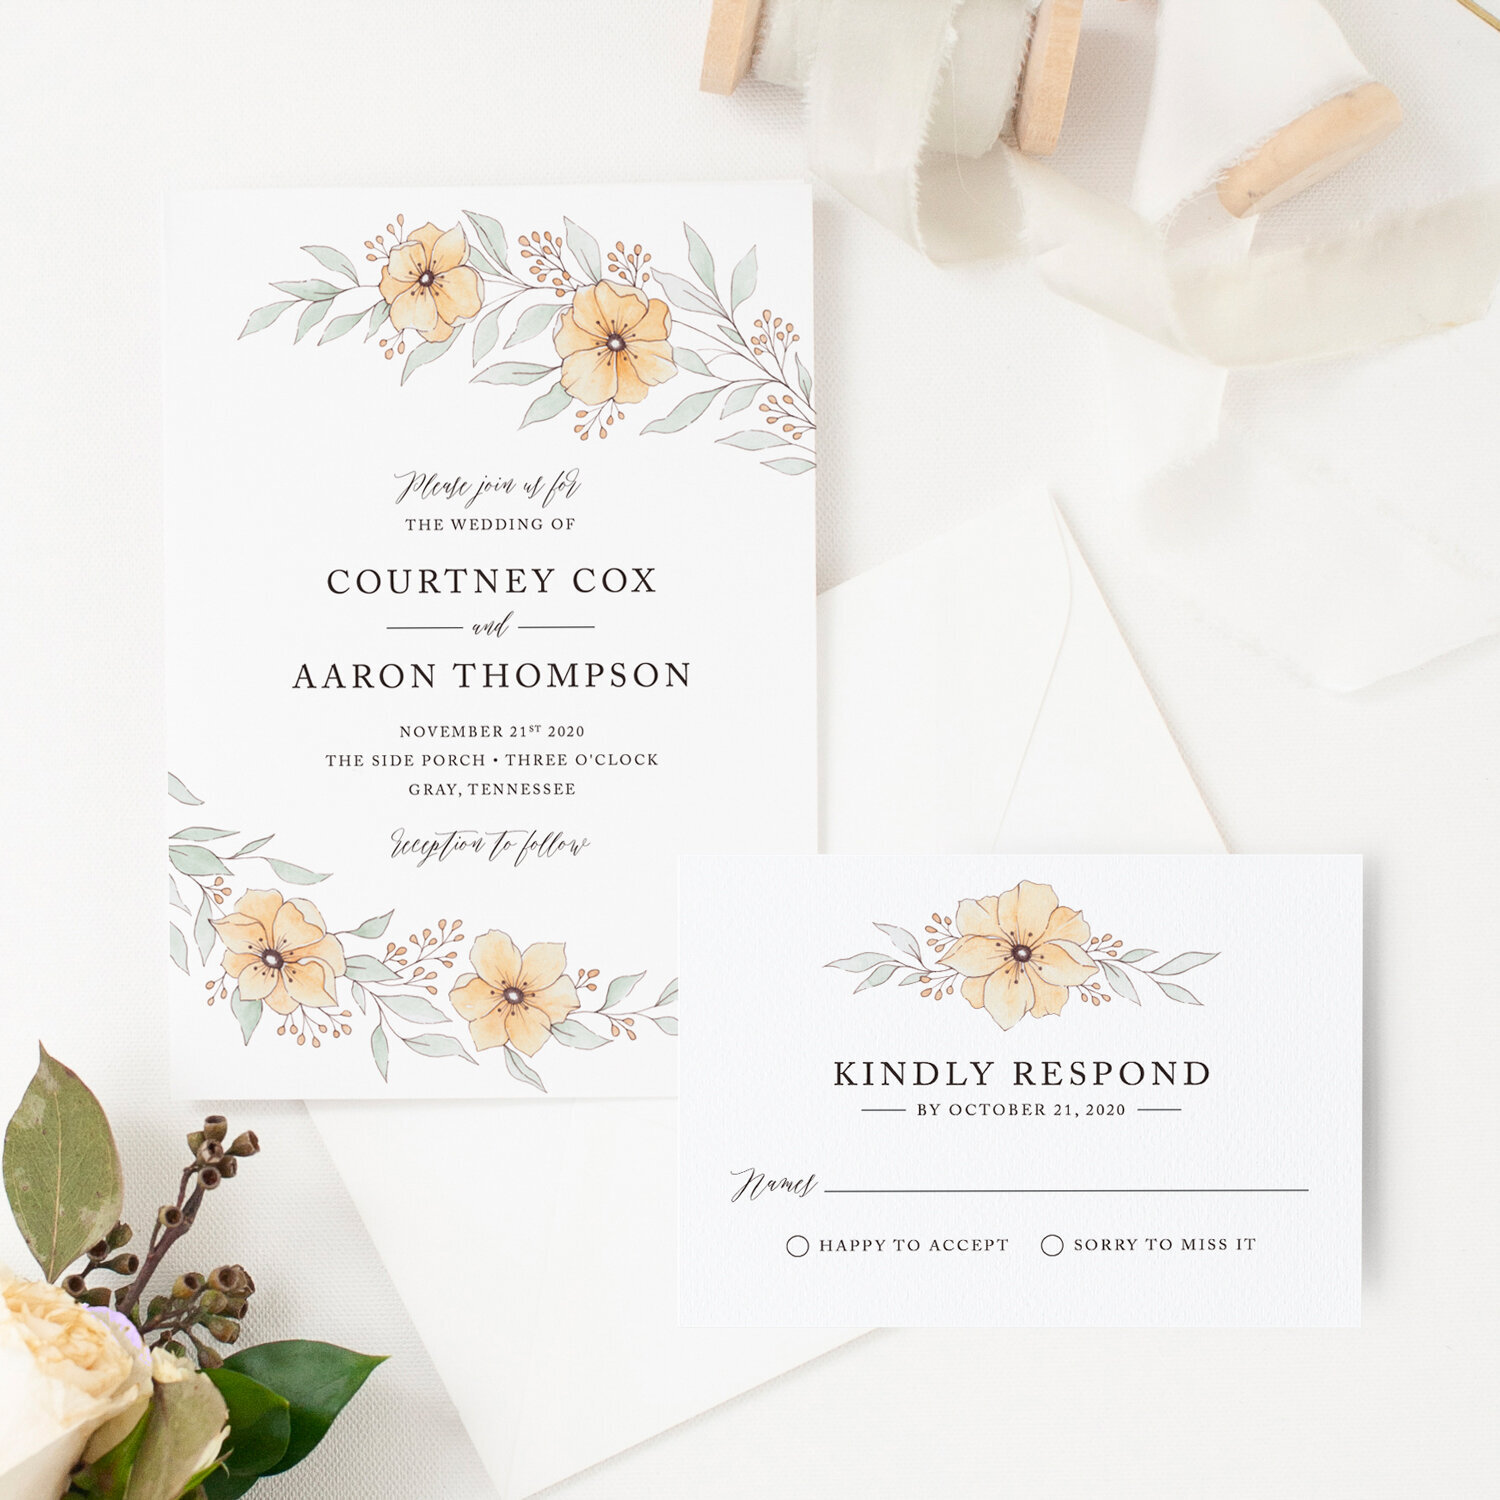 custom wedding invitation with watercolor florals